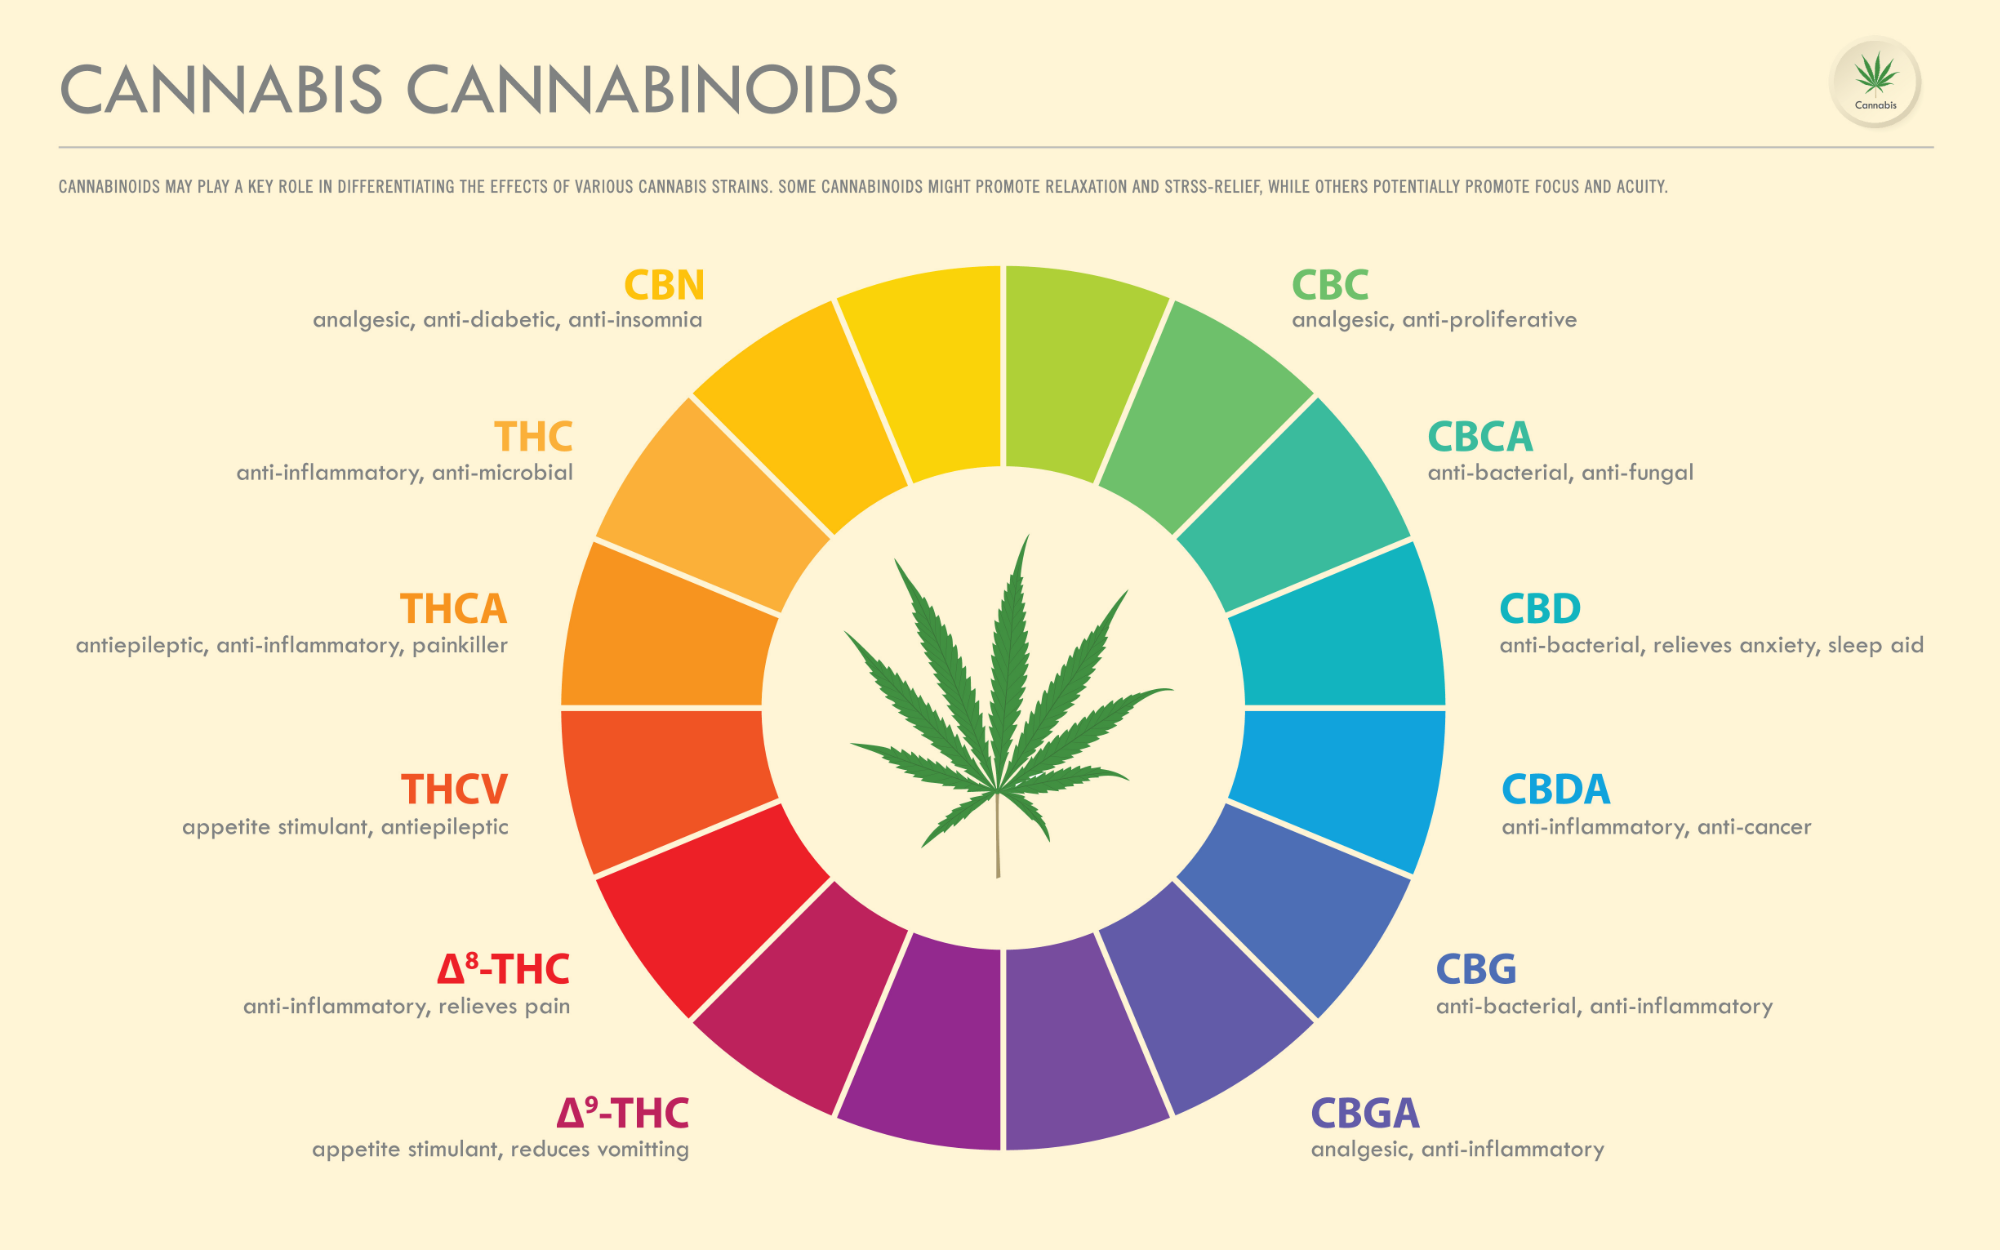 Image of Cannabis Cannabinoids from Beginners Guide to CBD, THC, & Cannabinoids